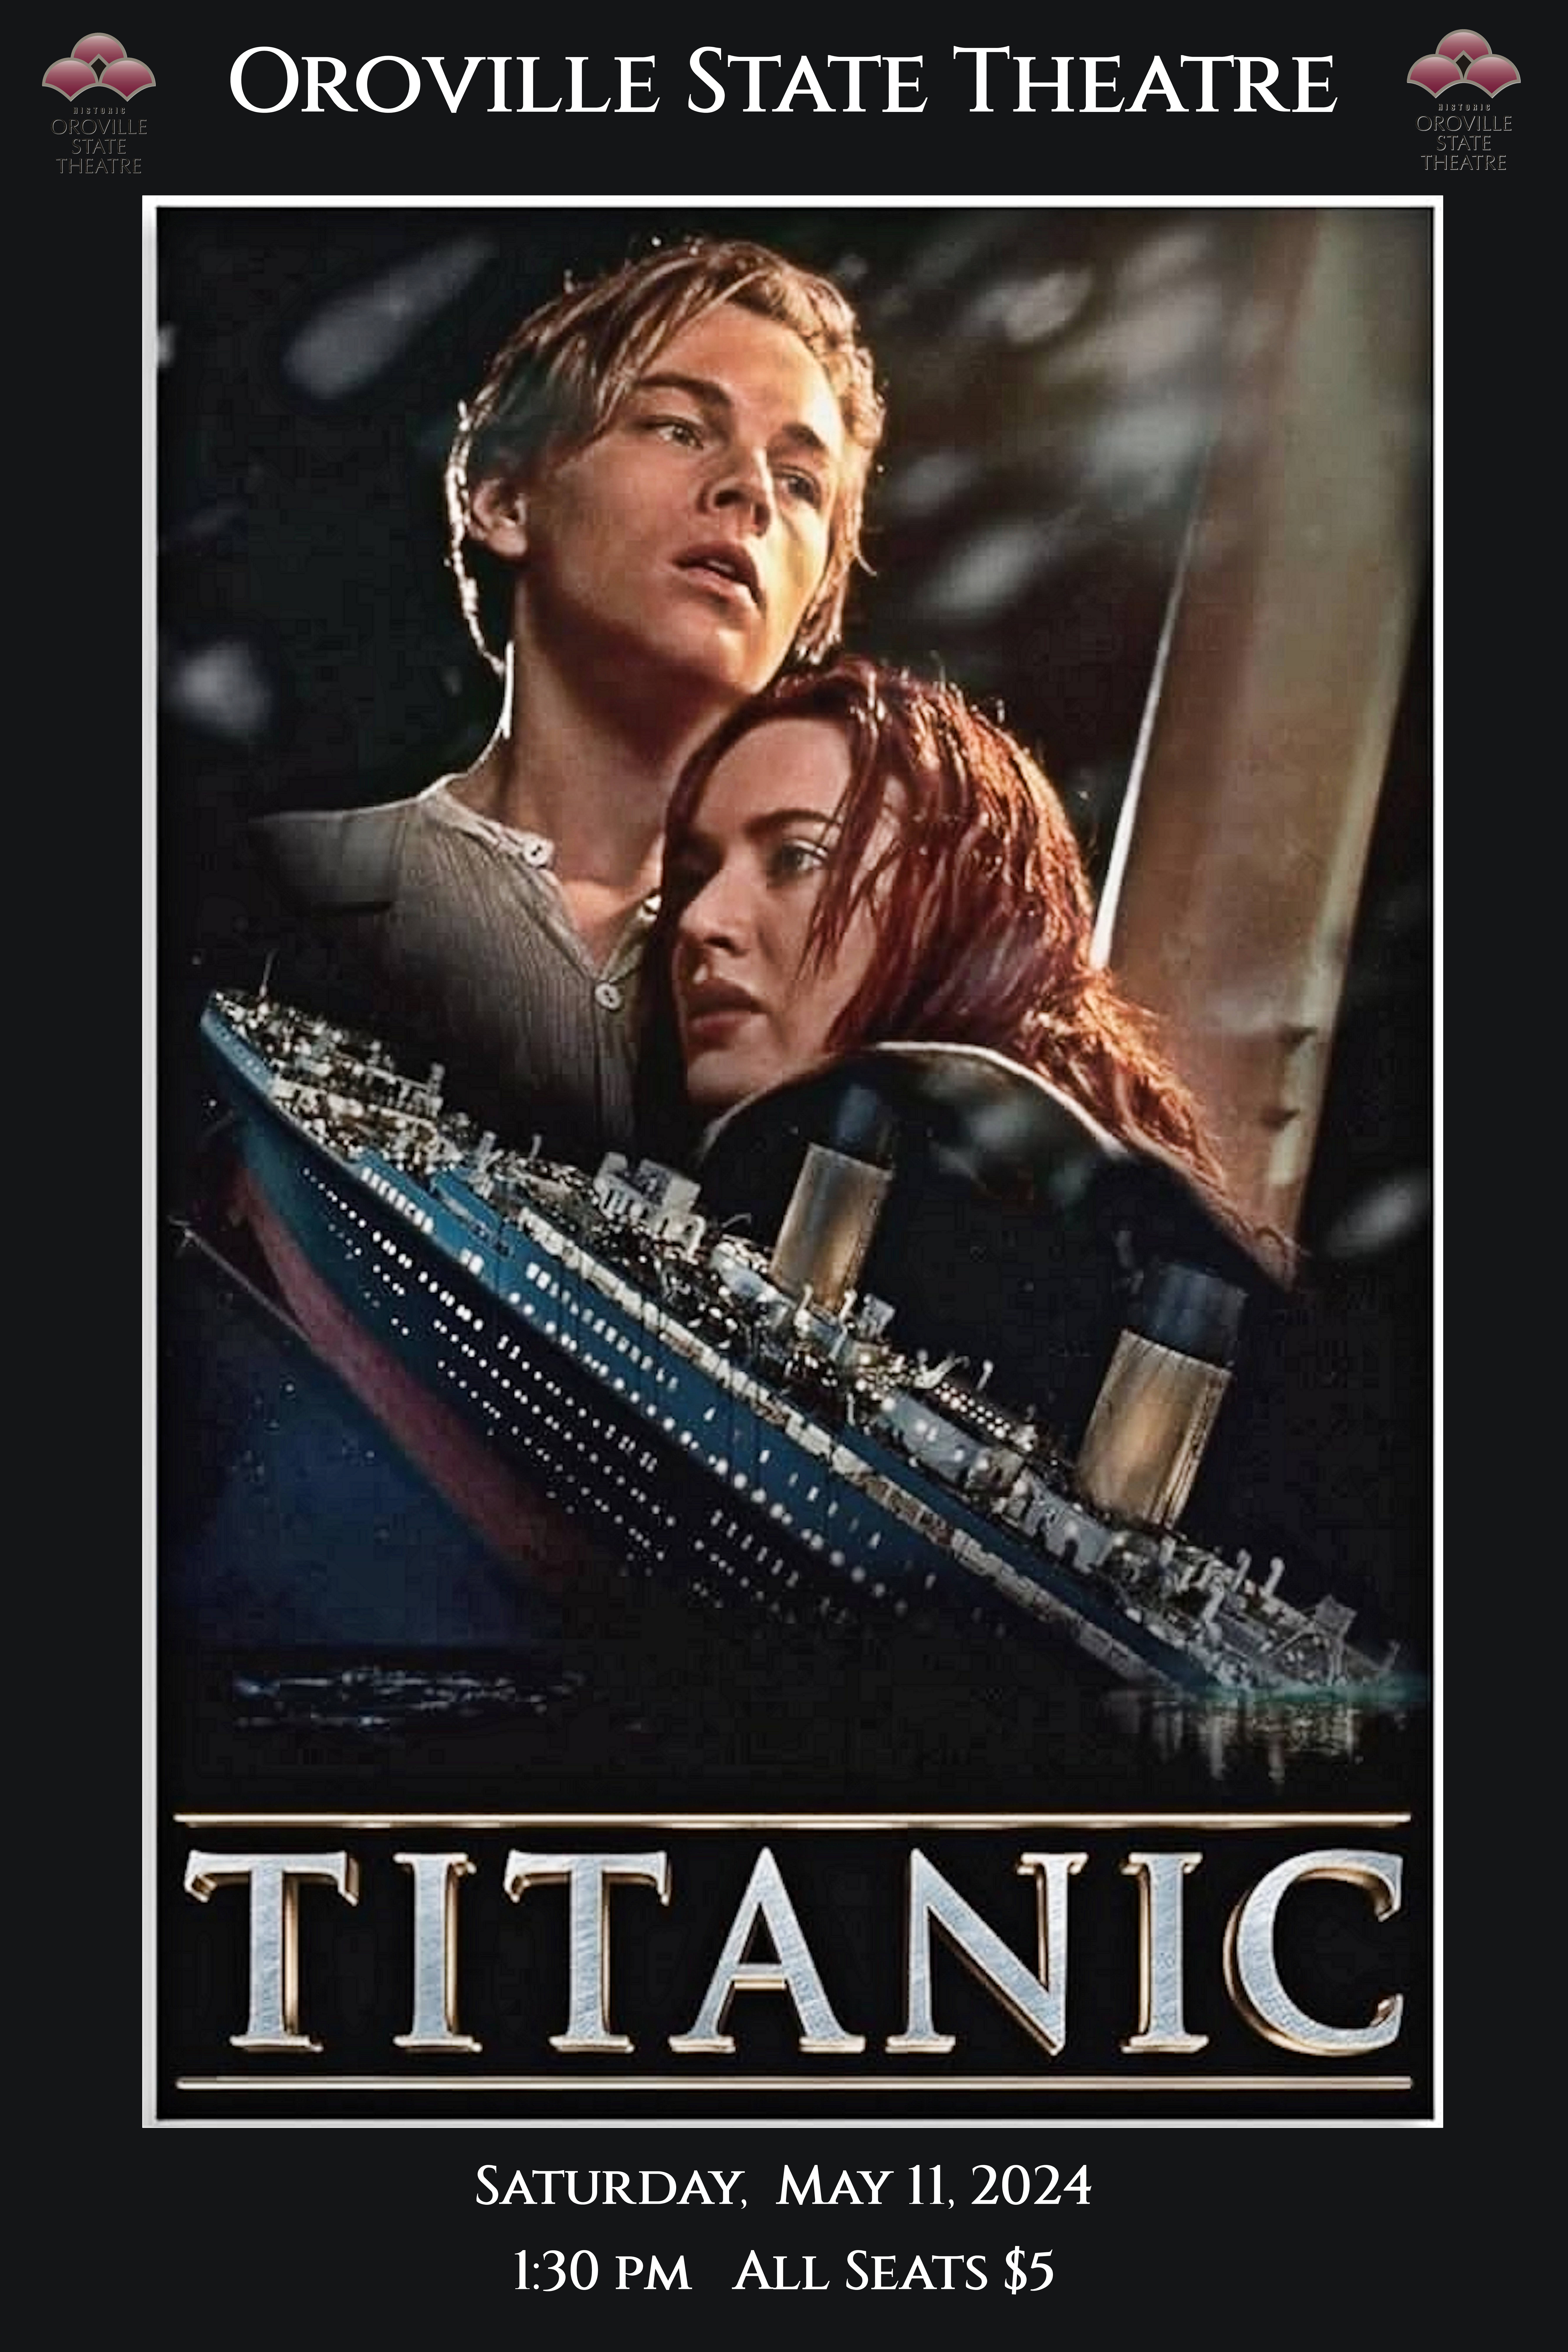 Saturday Matinee - featuring Titanic